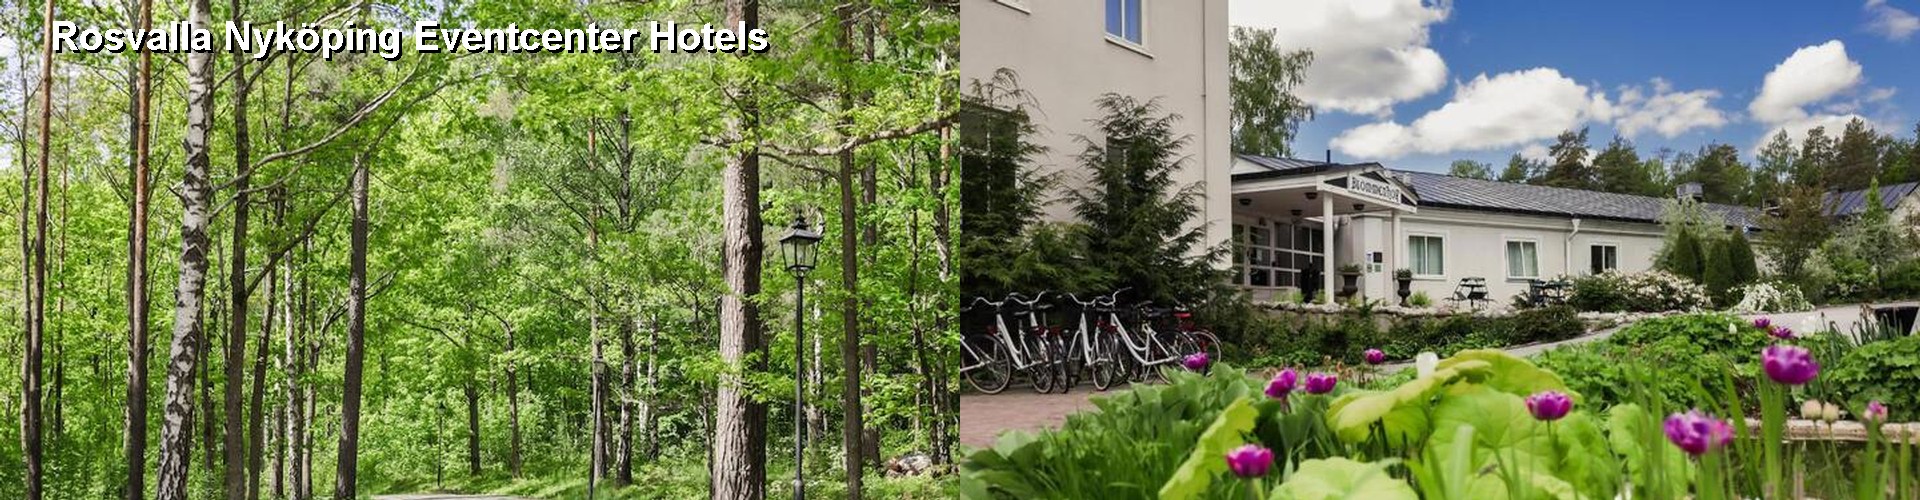 5 Best Hotels near Rosvalla Nyköping Eventcenter